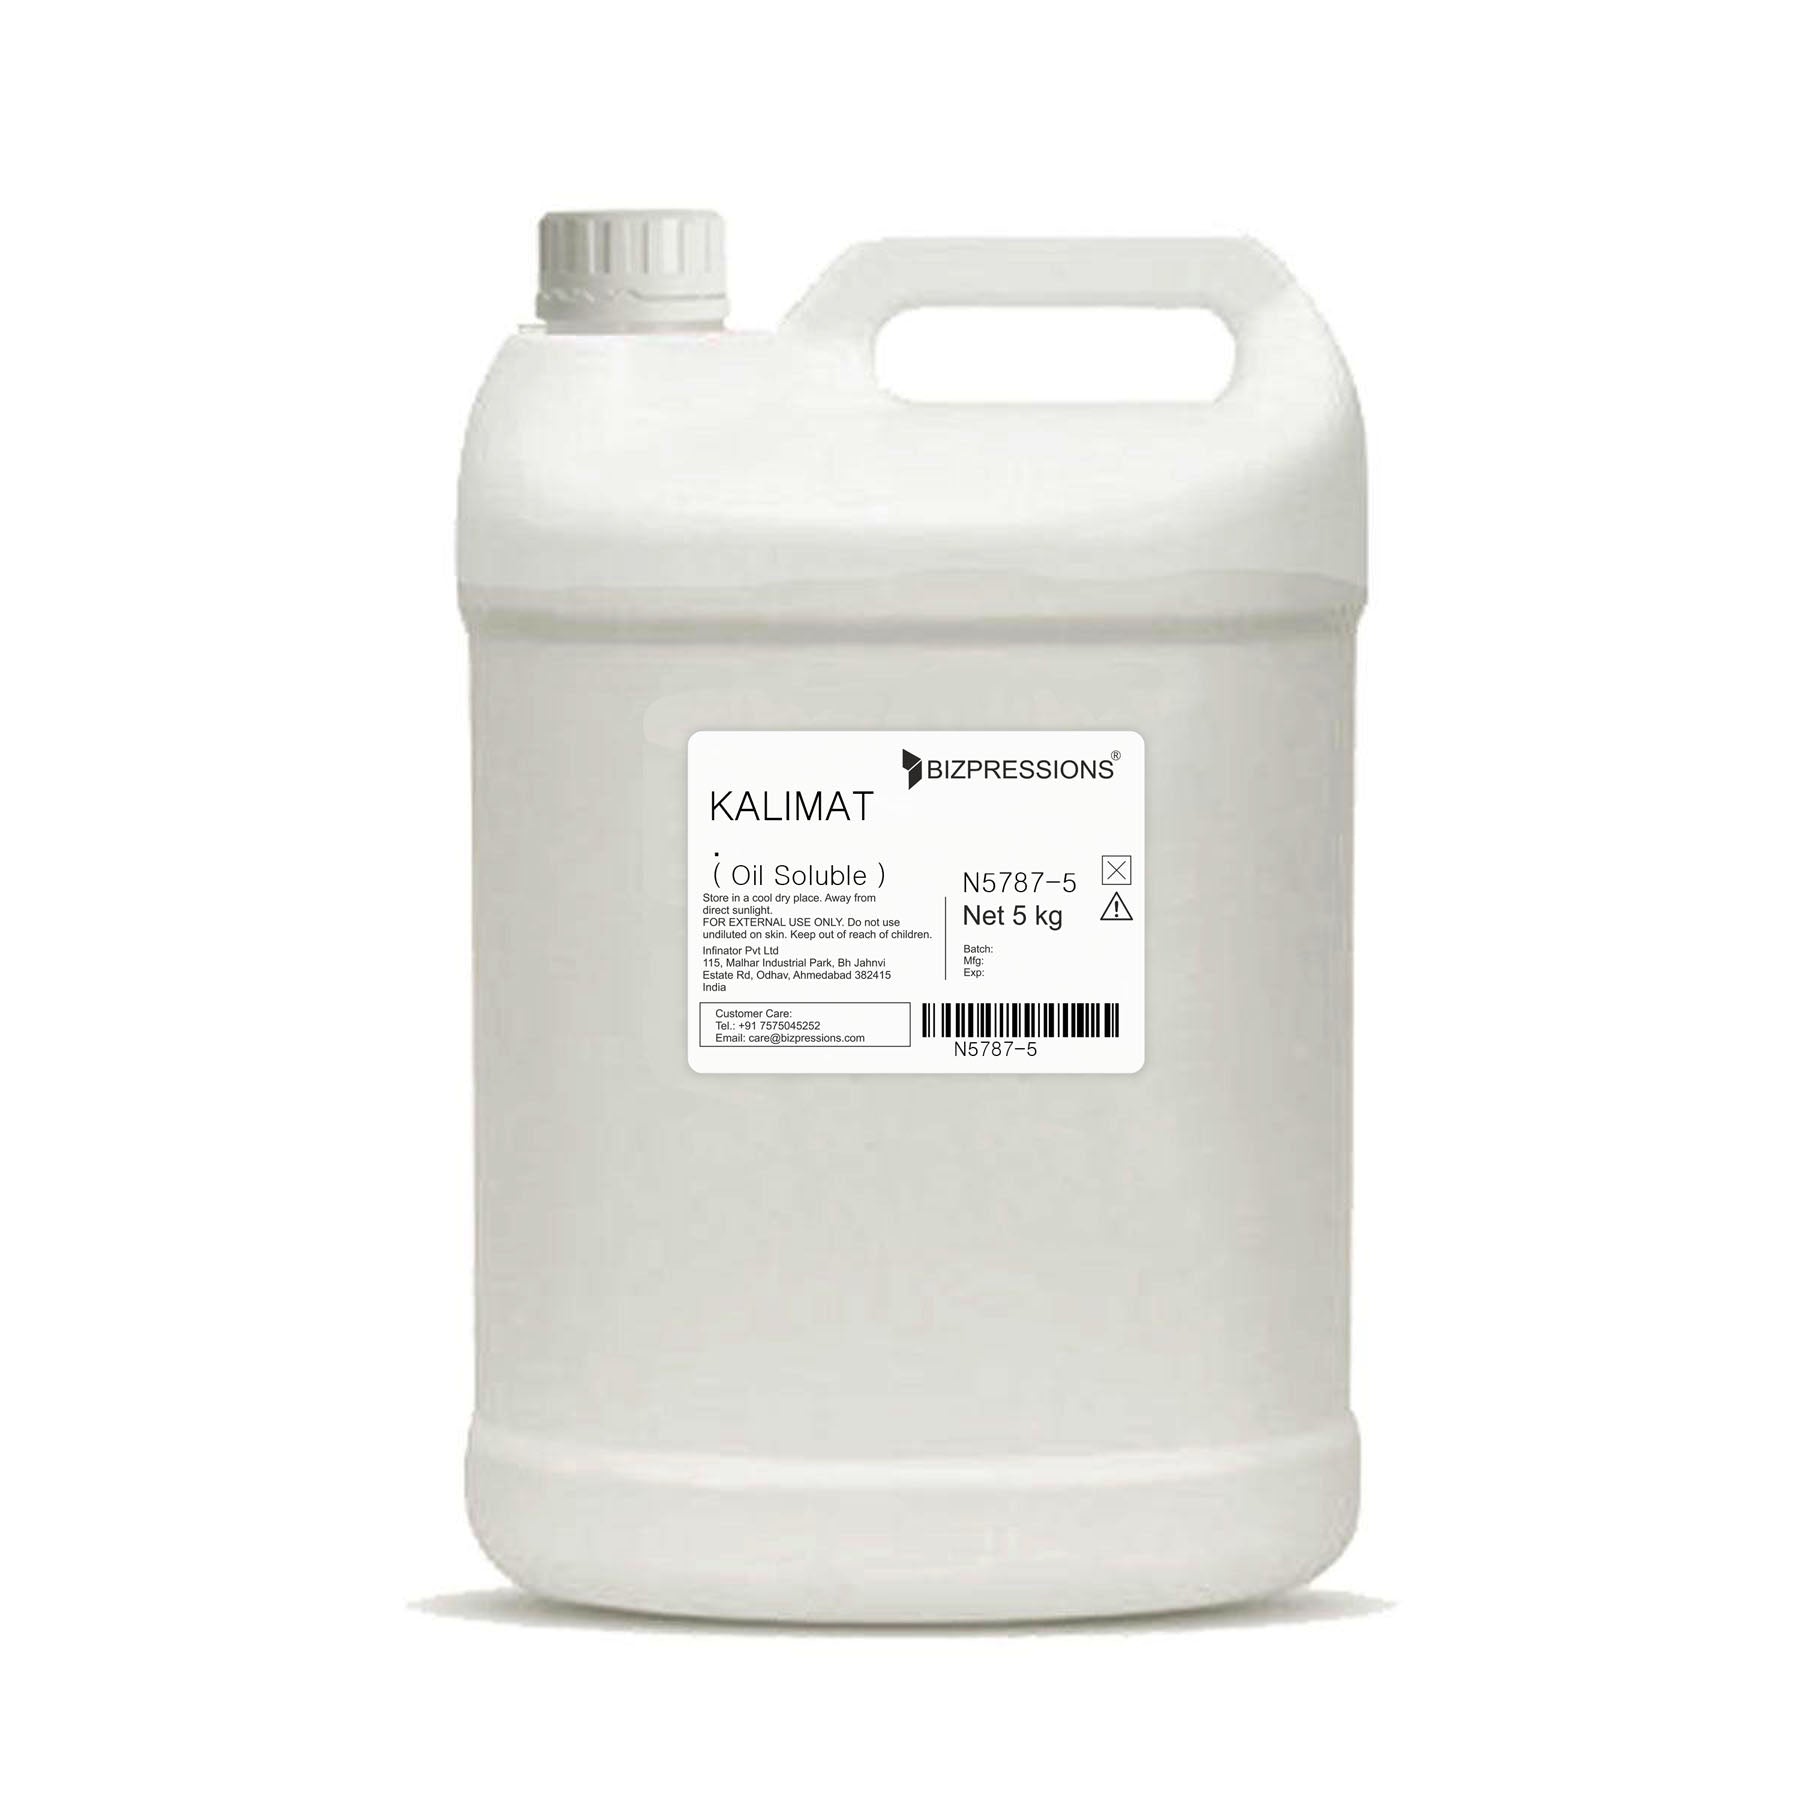 KALIMAT - Fragrance ( Oil Soluble ) - 5 kg